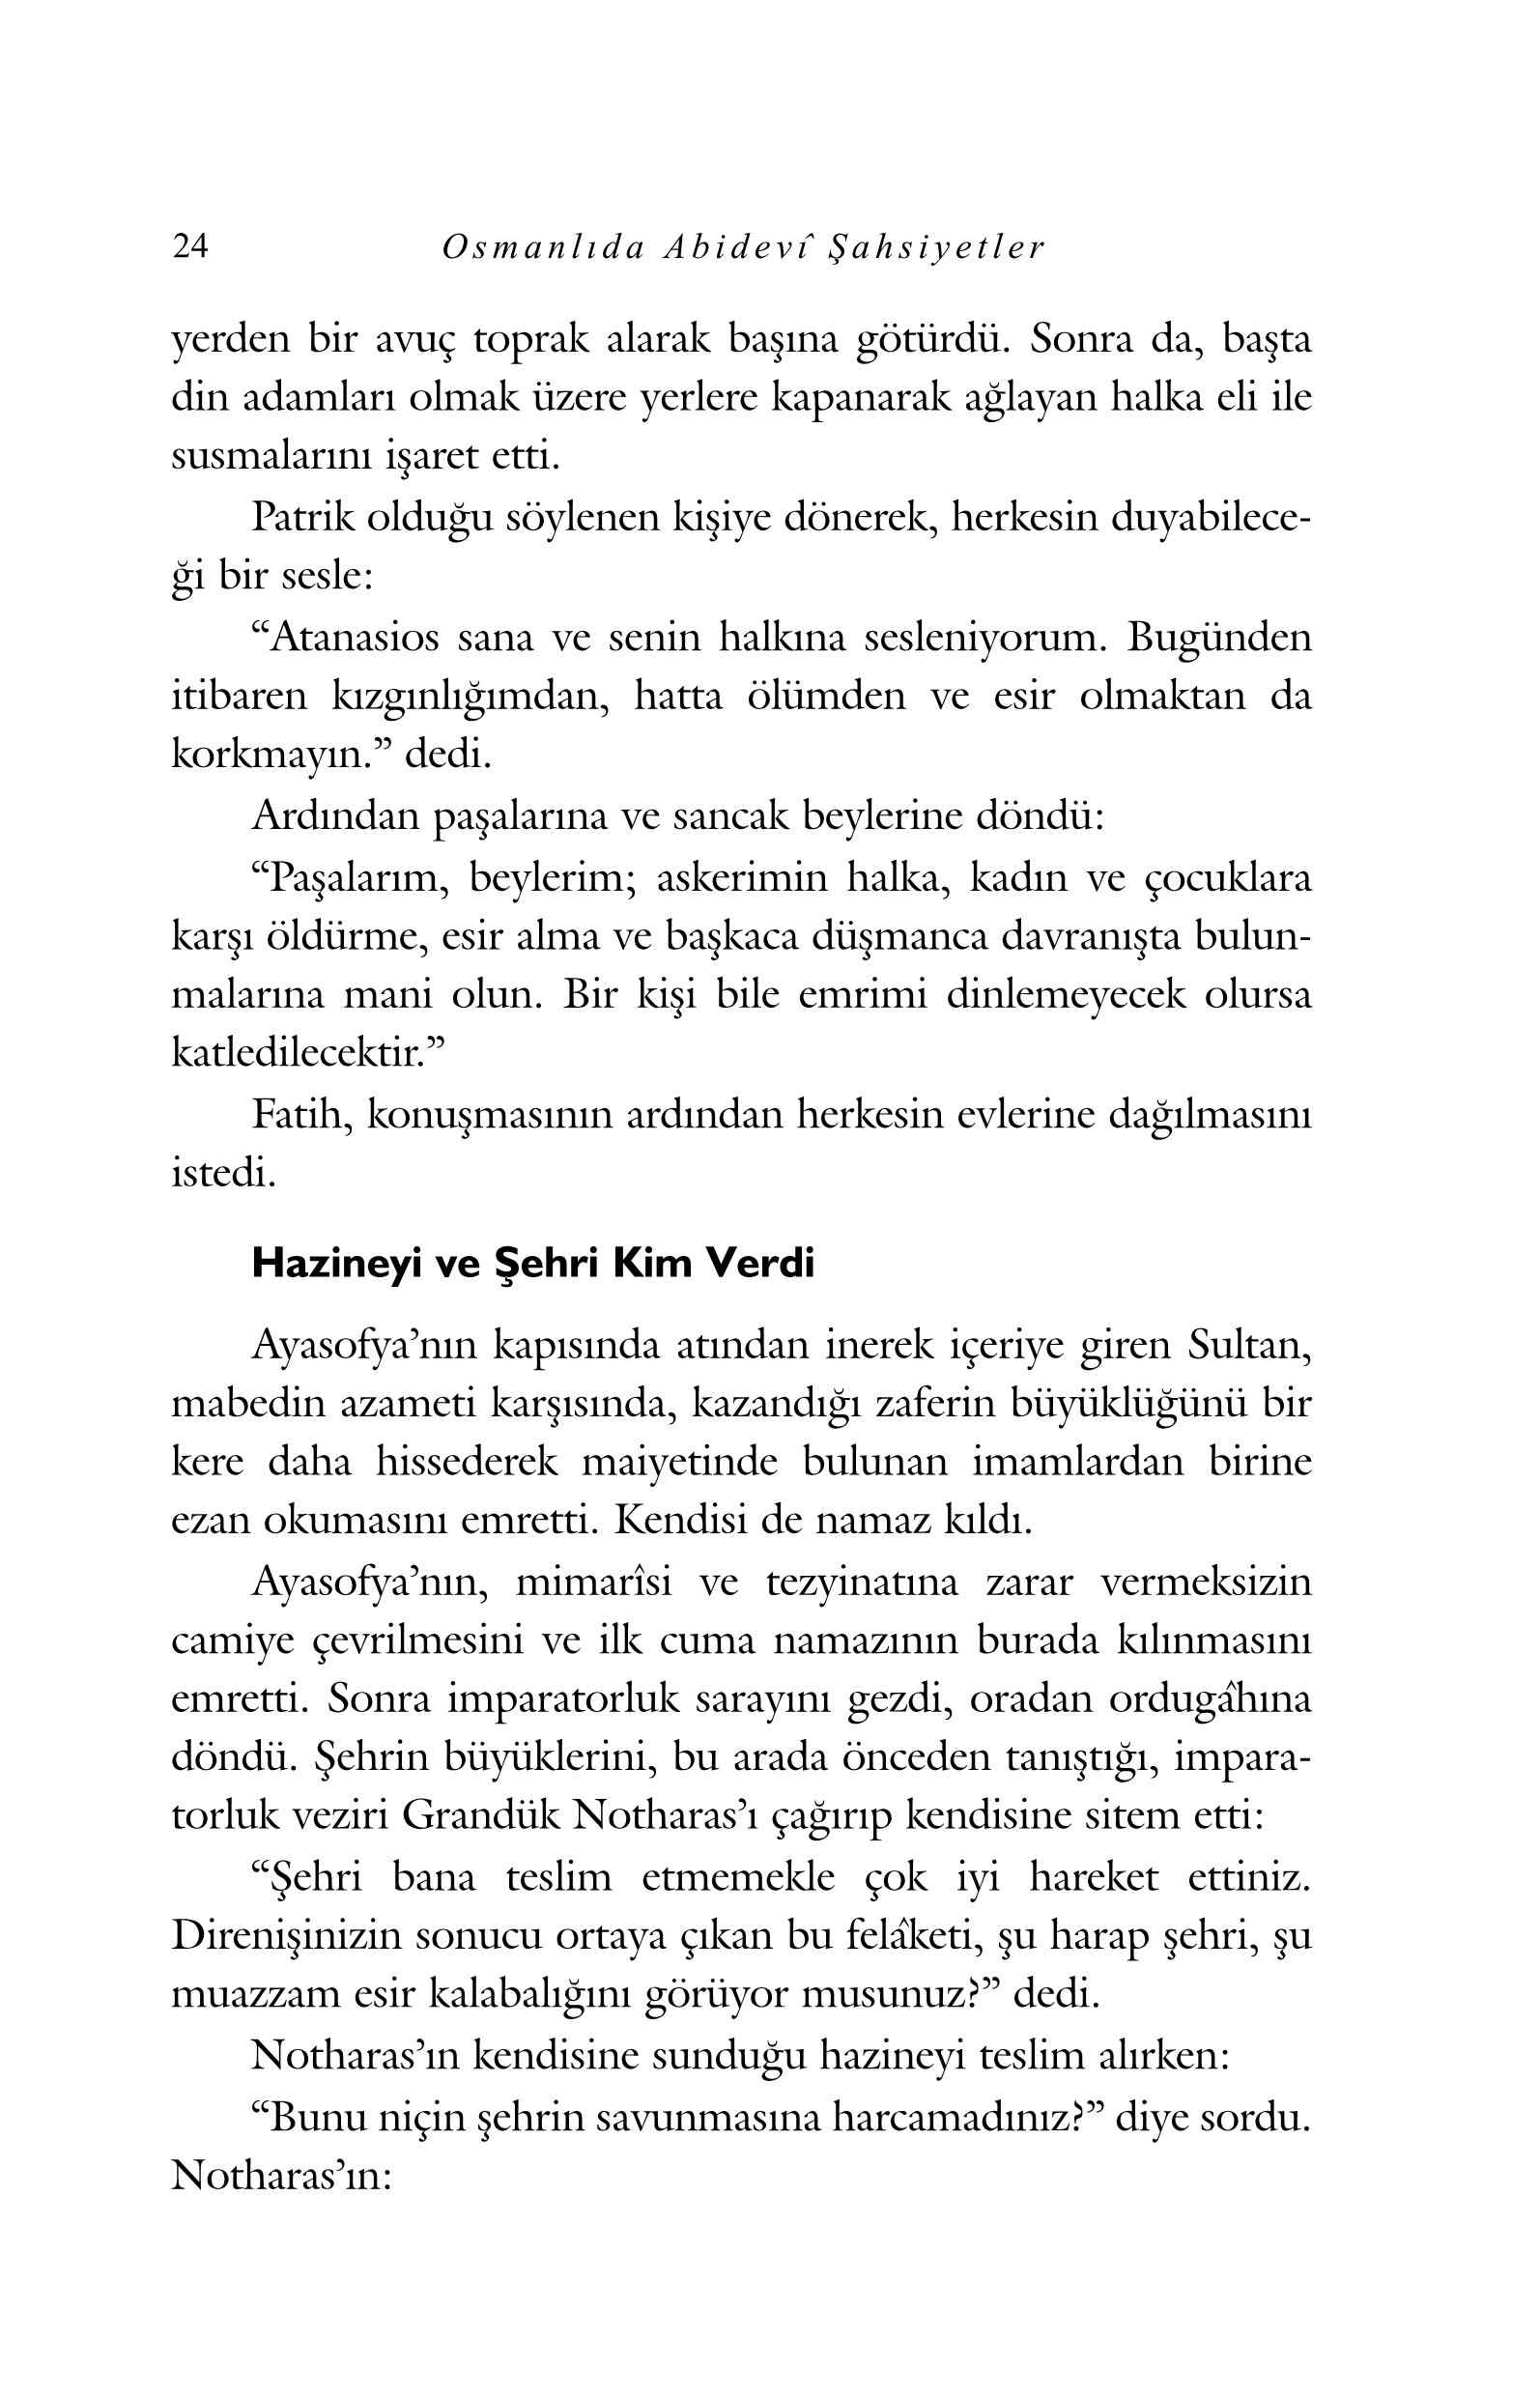 Can Alp Guvenc - Osmanlida Abidevi Sahsiyetler - KaynakYayinlari.pdf, 188-Sayfa 